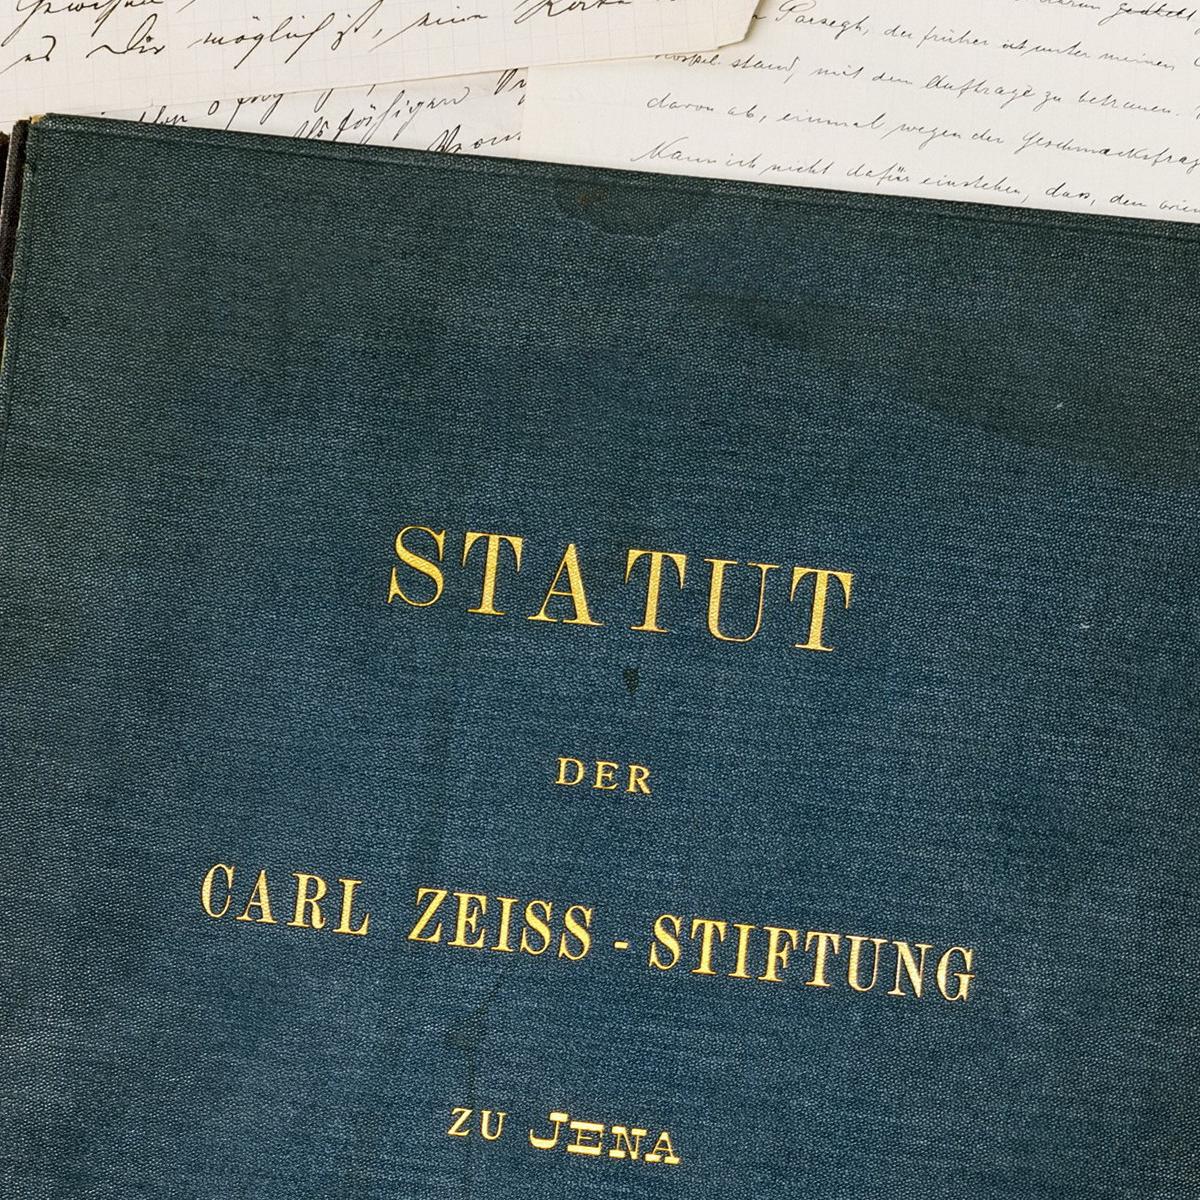 Carl Zeiss Foundation statute	